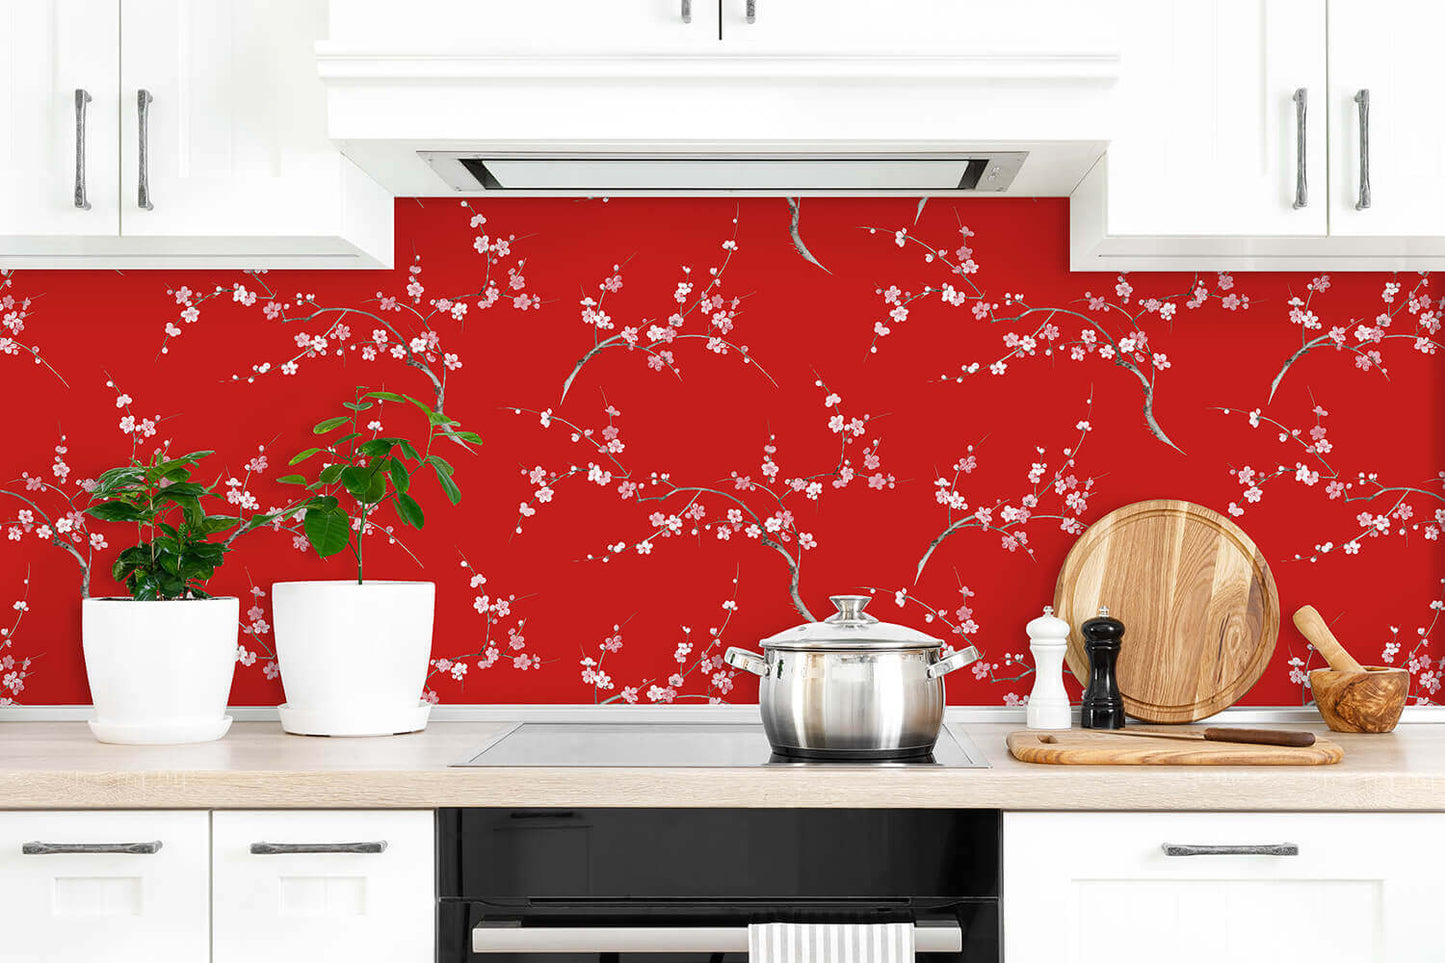 NextWall Cherry Blossom Floral Peel & Stick Wallpaper - Red